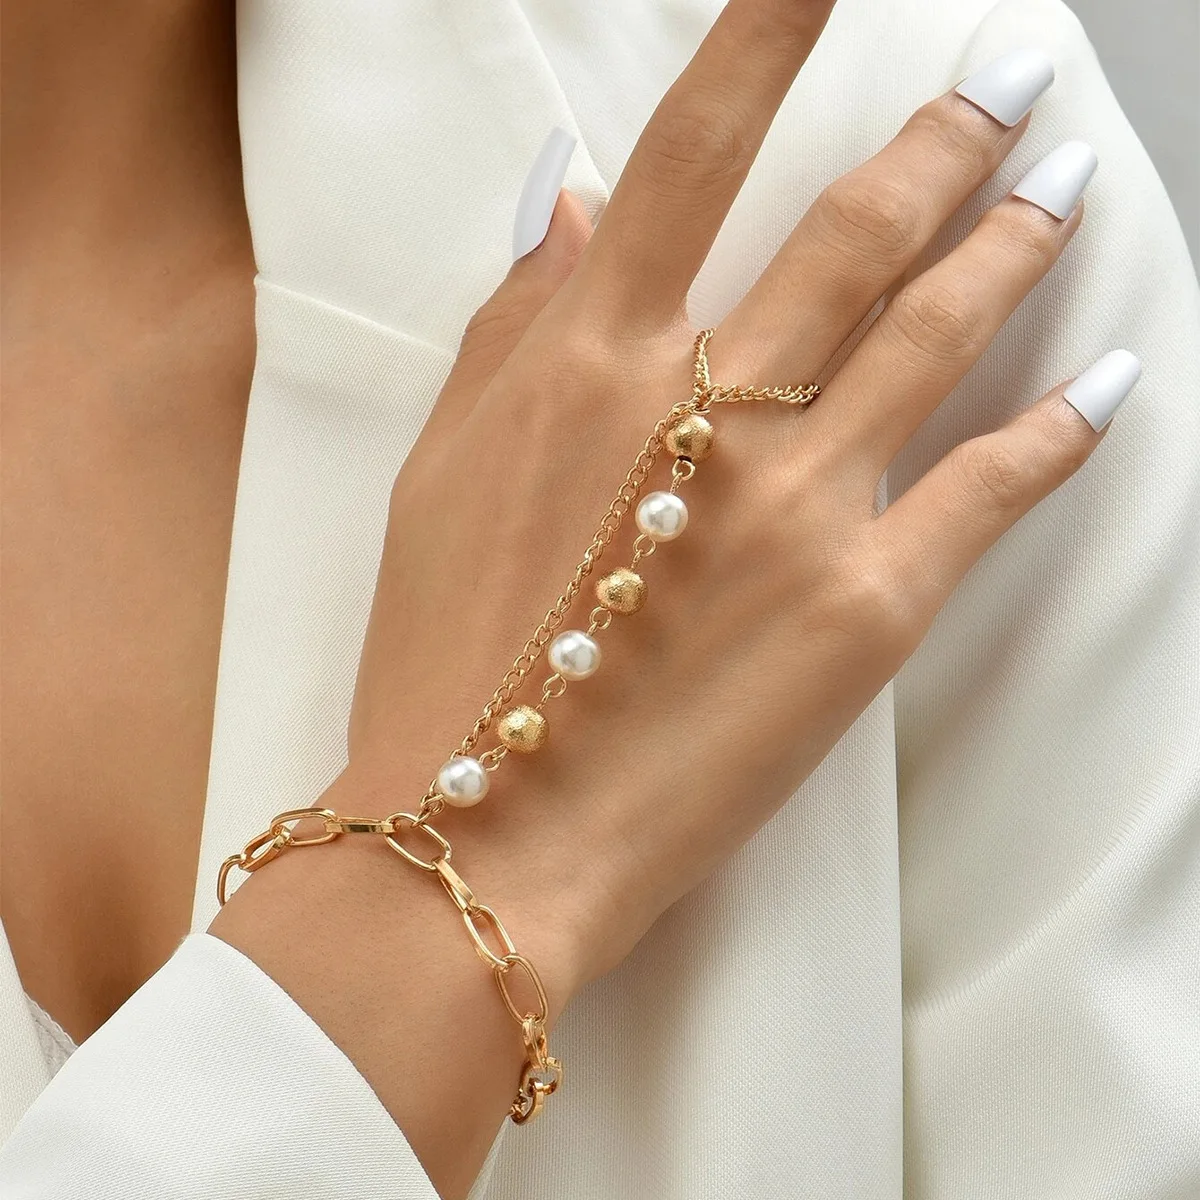 Slave Chain Bracelet Ring Hand Chain Accessories – Jon's Imports Inc